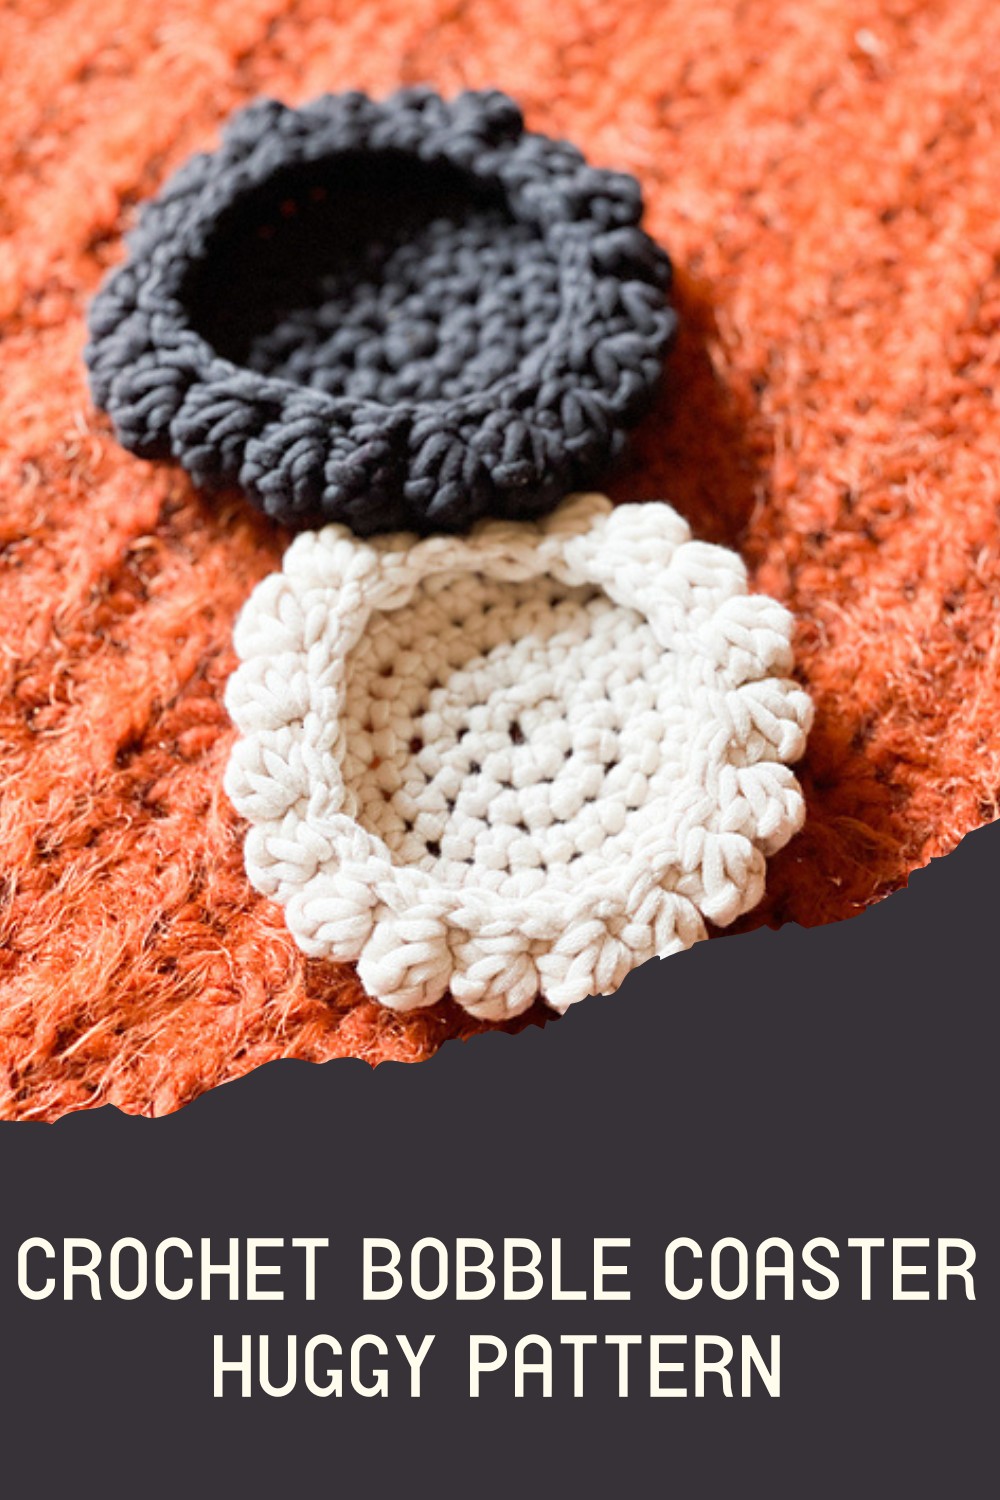 Crochet Bobble Coaster Huggy Pattern